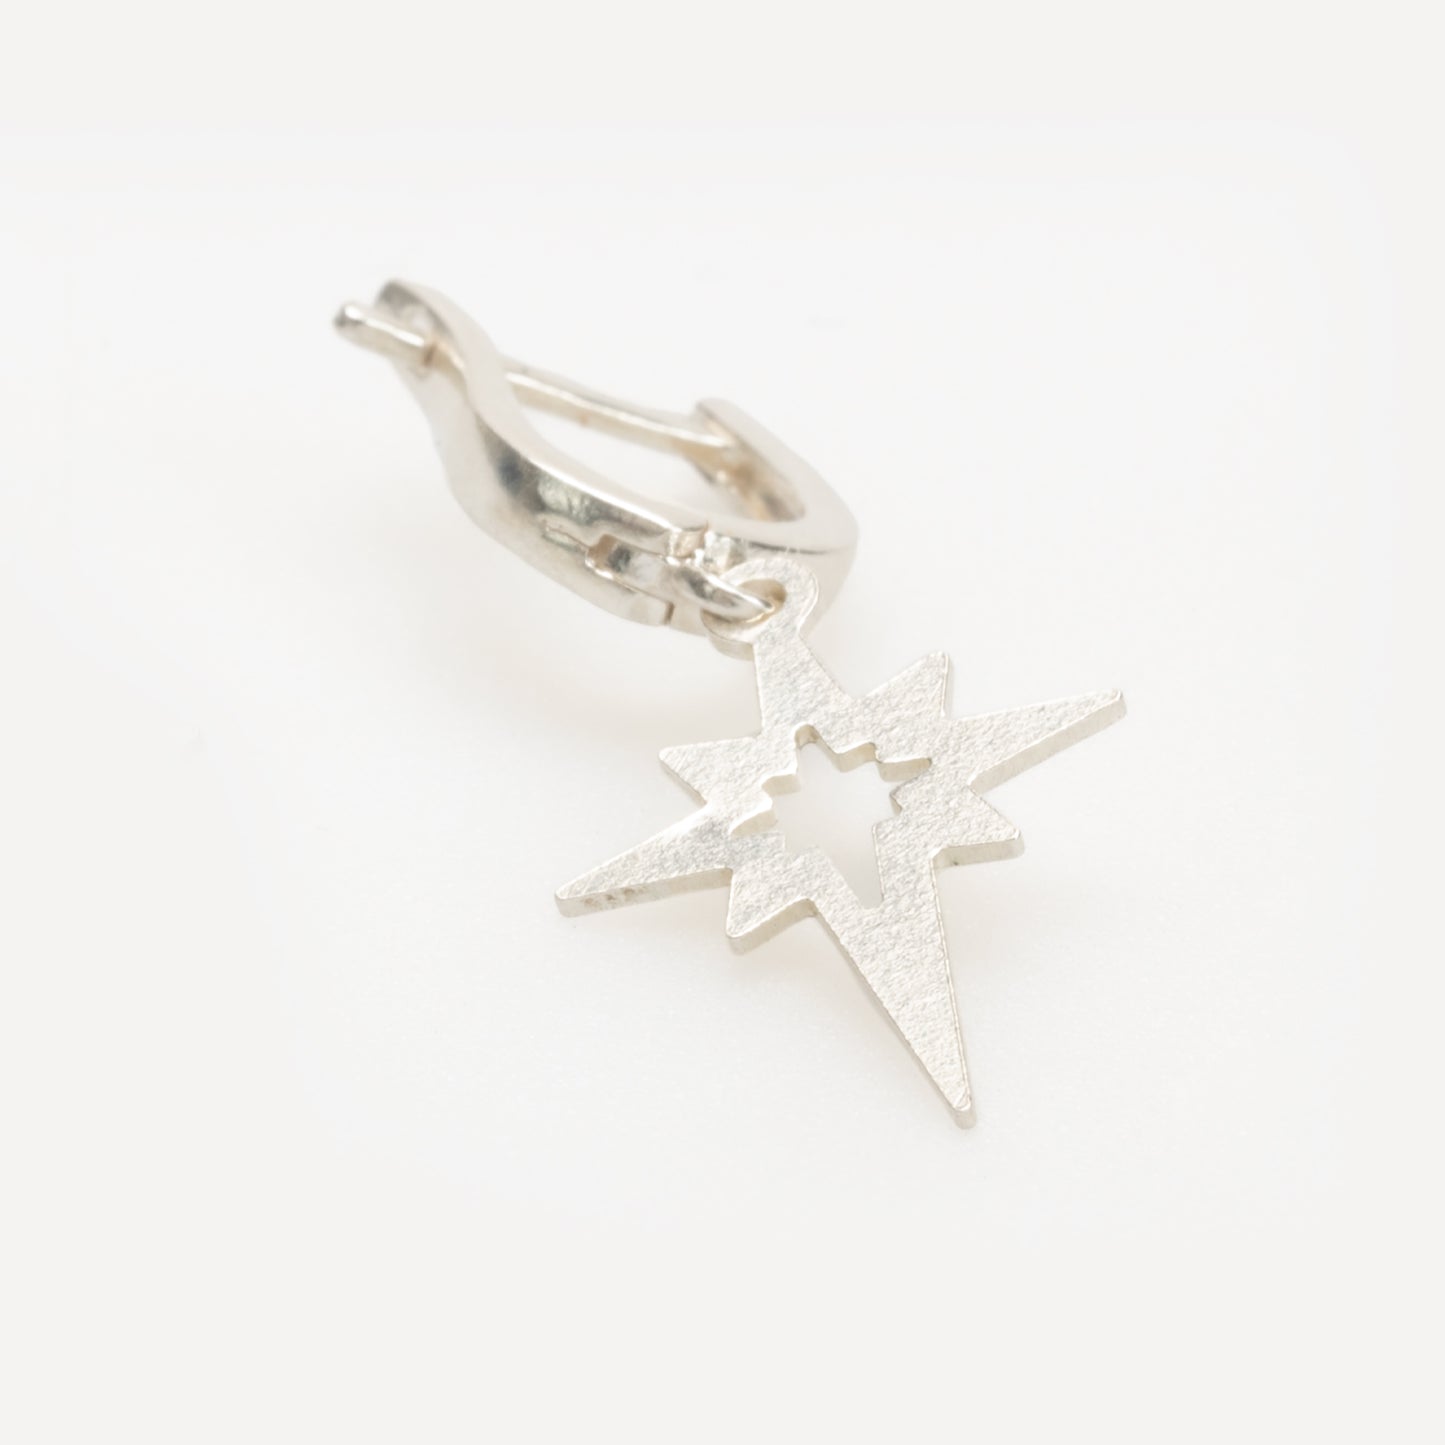 Silver North Star Dangle Earrings, Pole Star Drop Earrings, North Star Earrings, Gift for Her. Minimal Dainty Drop & Dangle Star Earrings